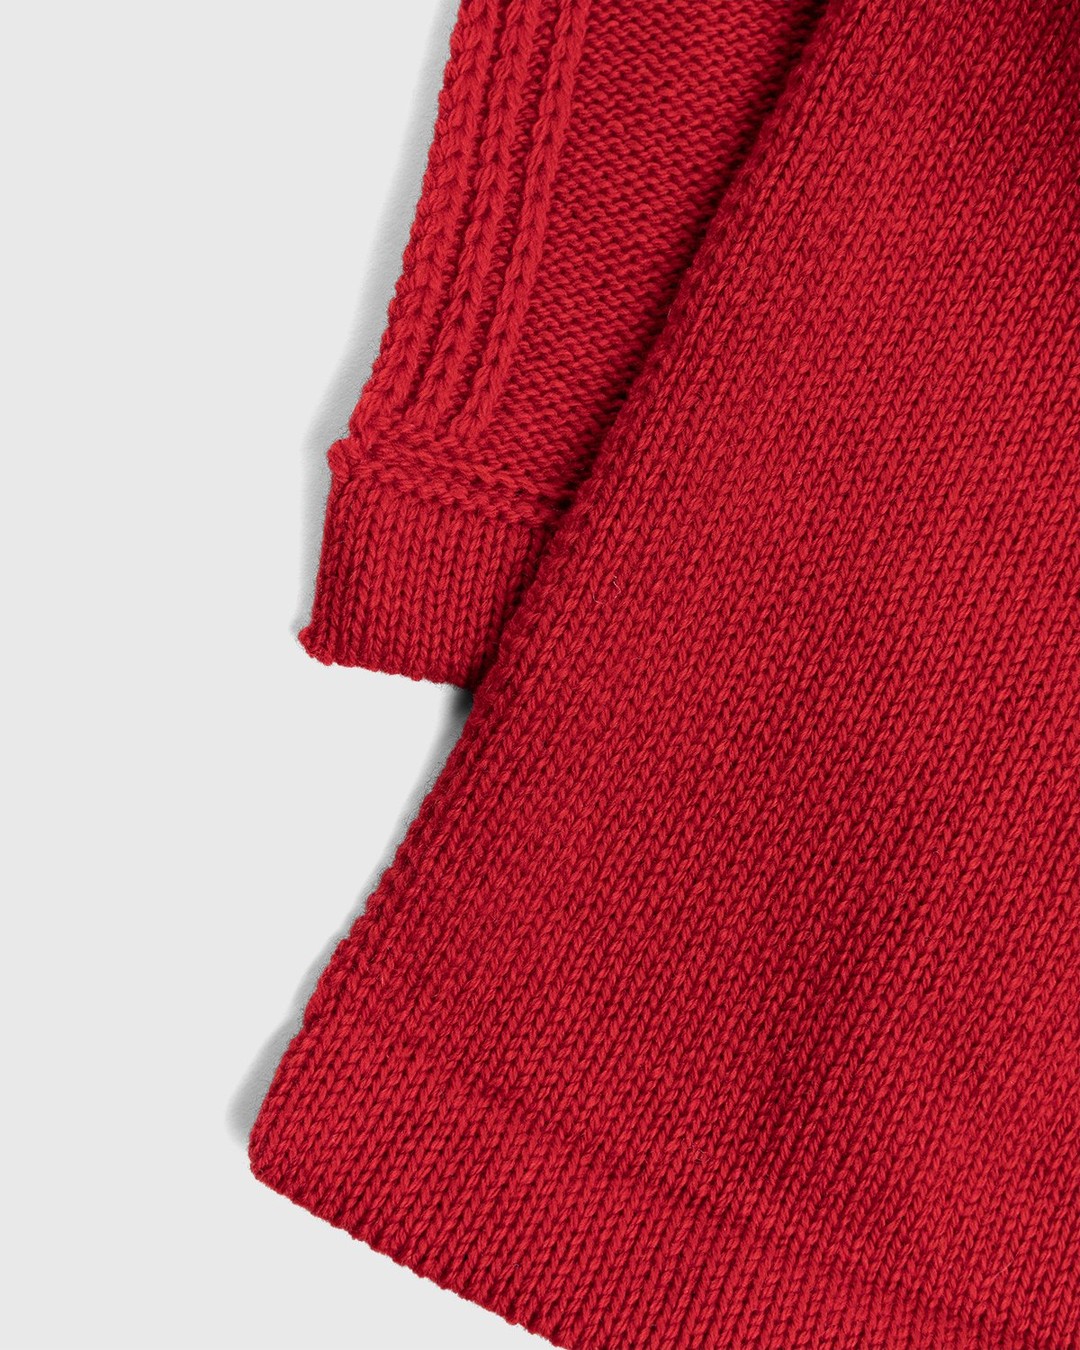 Jil Sander – Plastron Bib Red - Knitwear - Red - Image 4